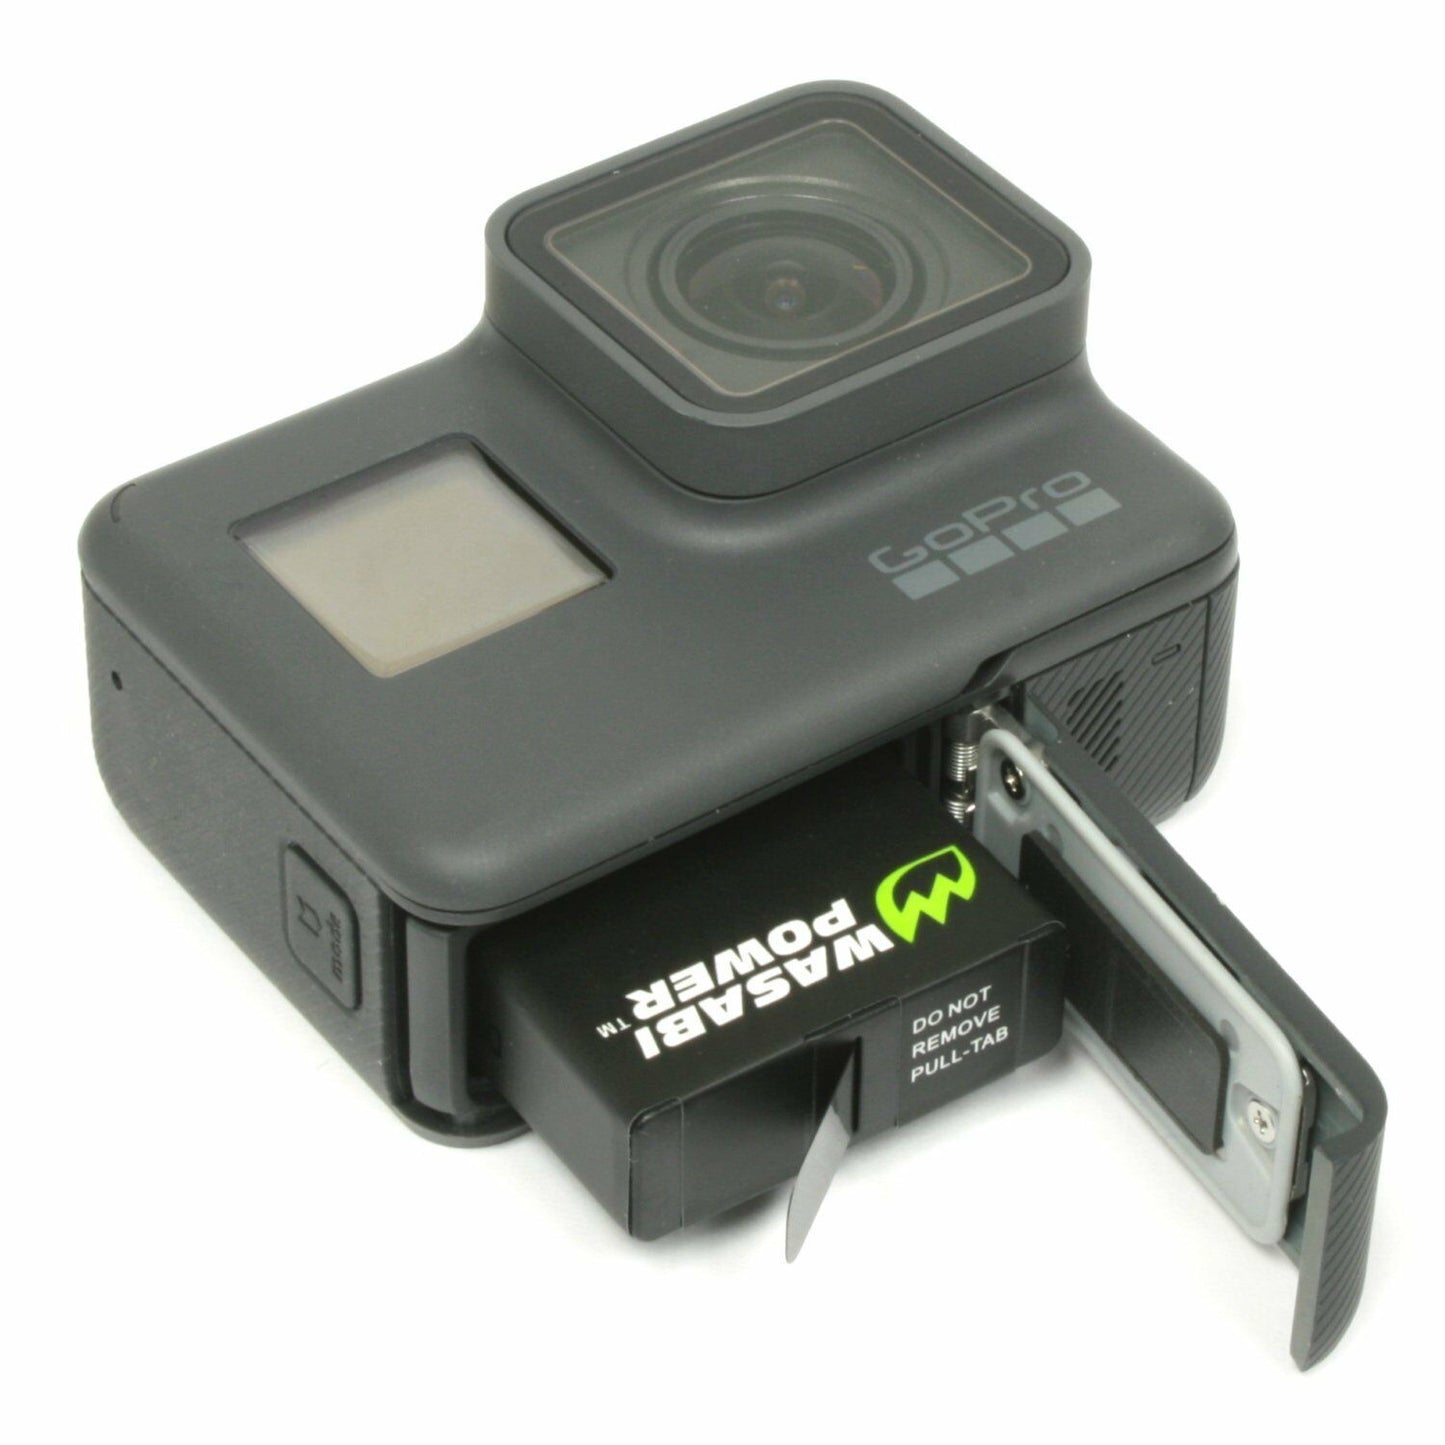 Wasabi Power 1220mAh Battery x 3 & Triple Slot USB Charger for GoPro HERO7 Black